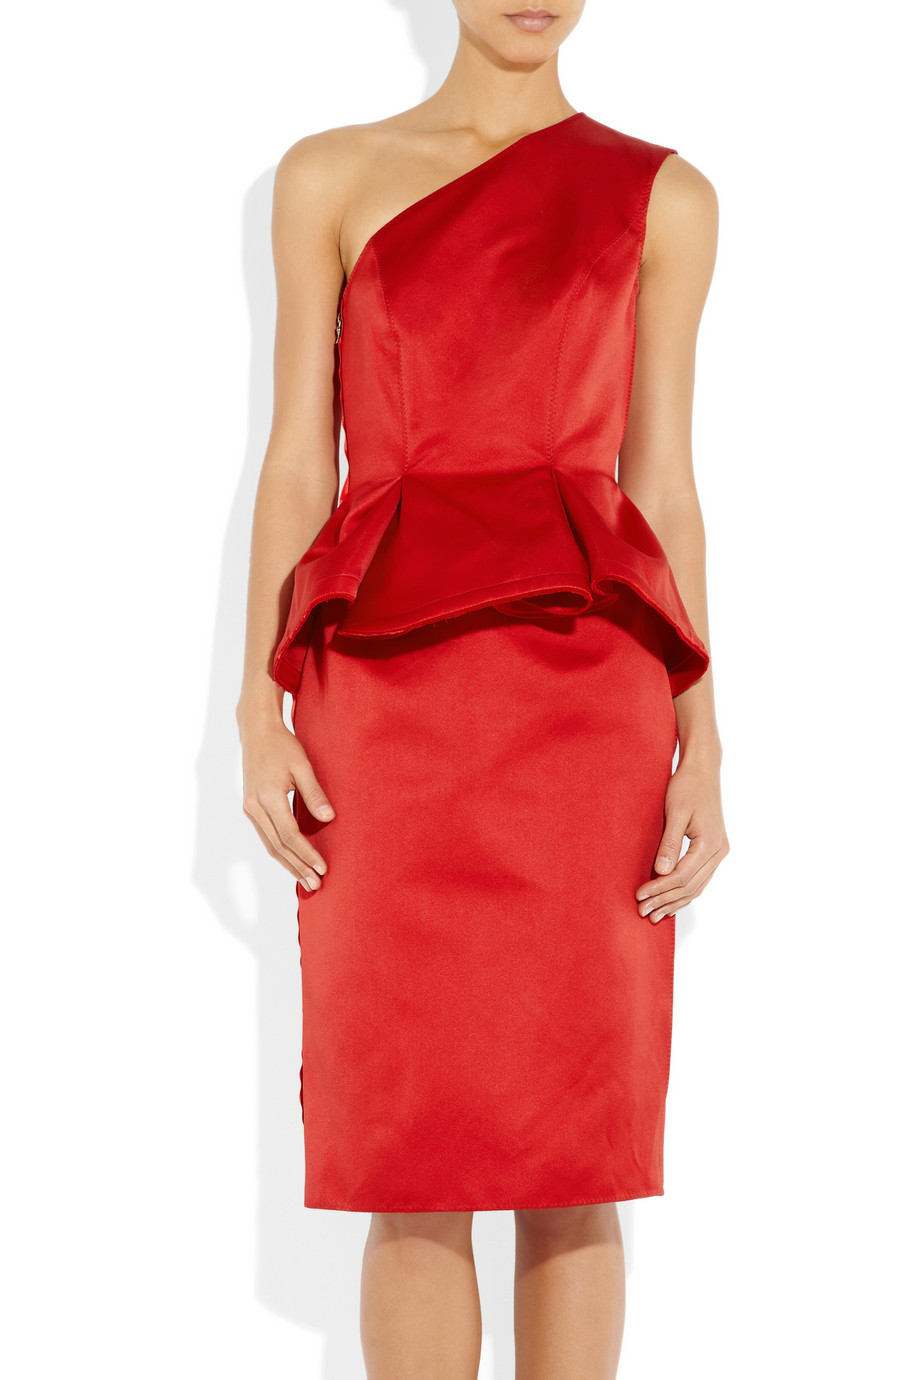 Lyst - Lanvin Satin One-shoulder Peplum Dress in Red